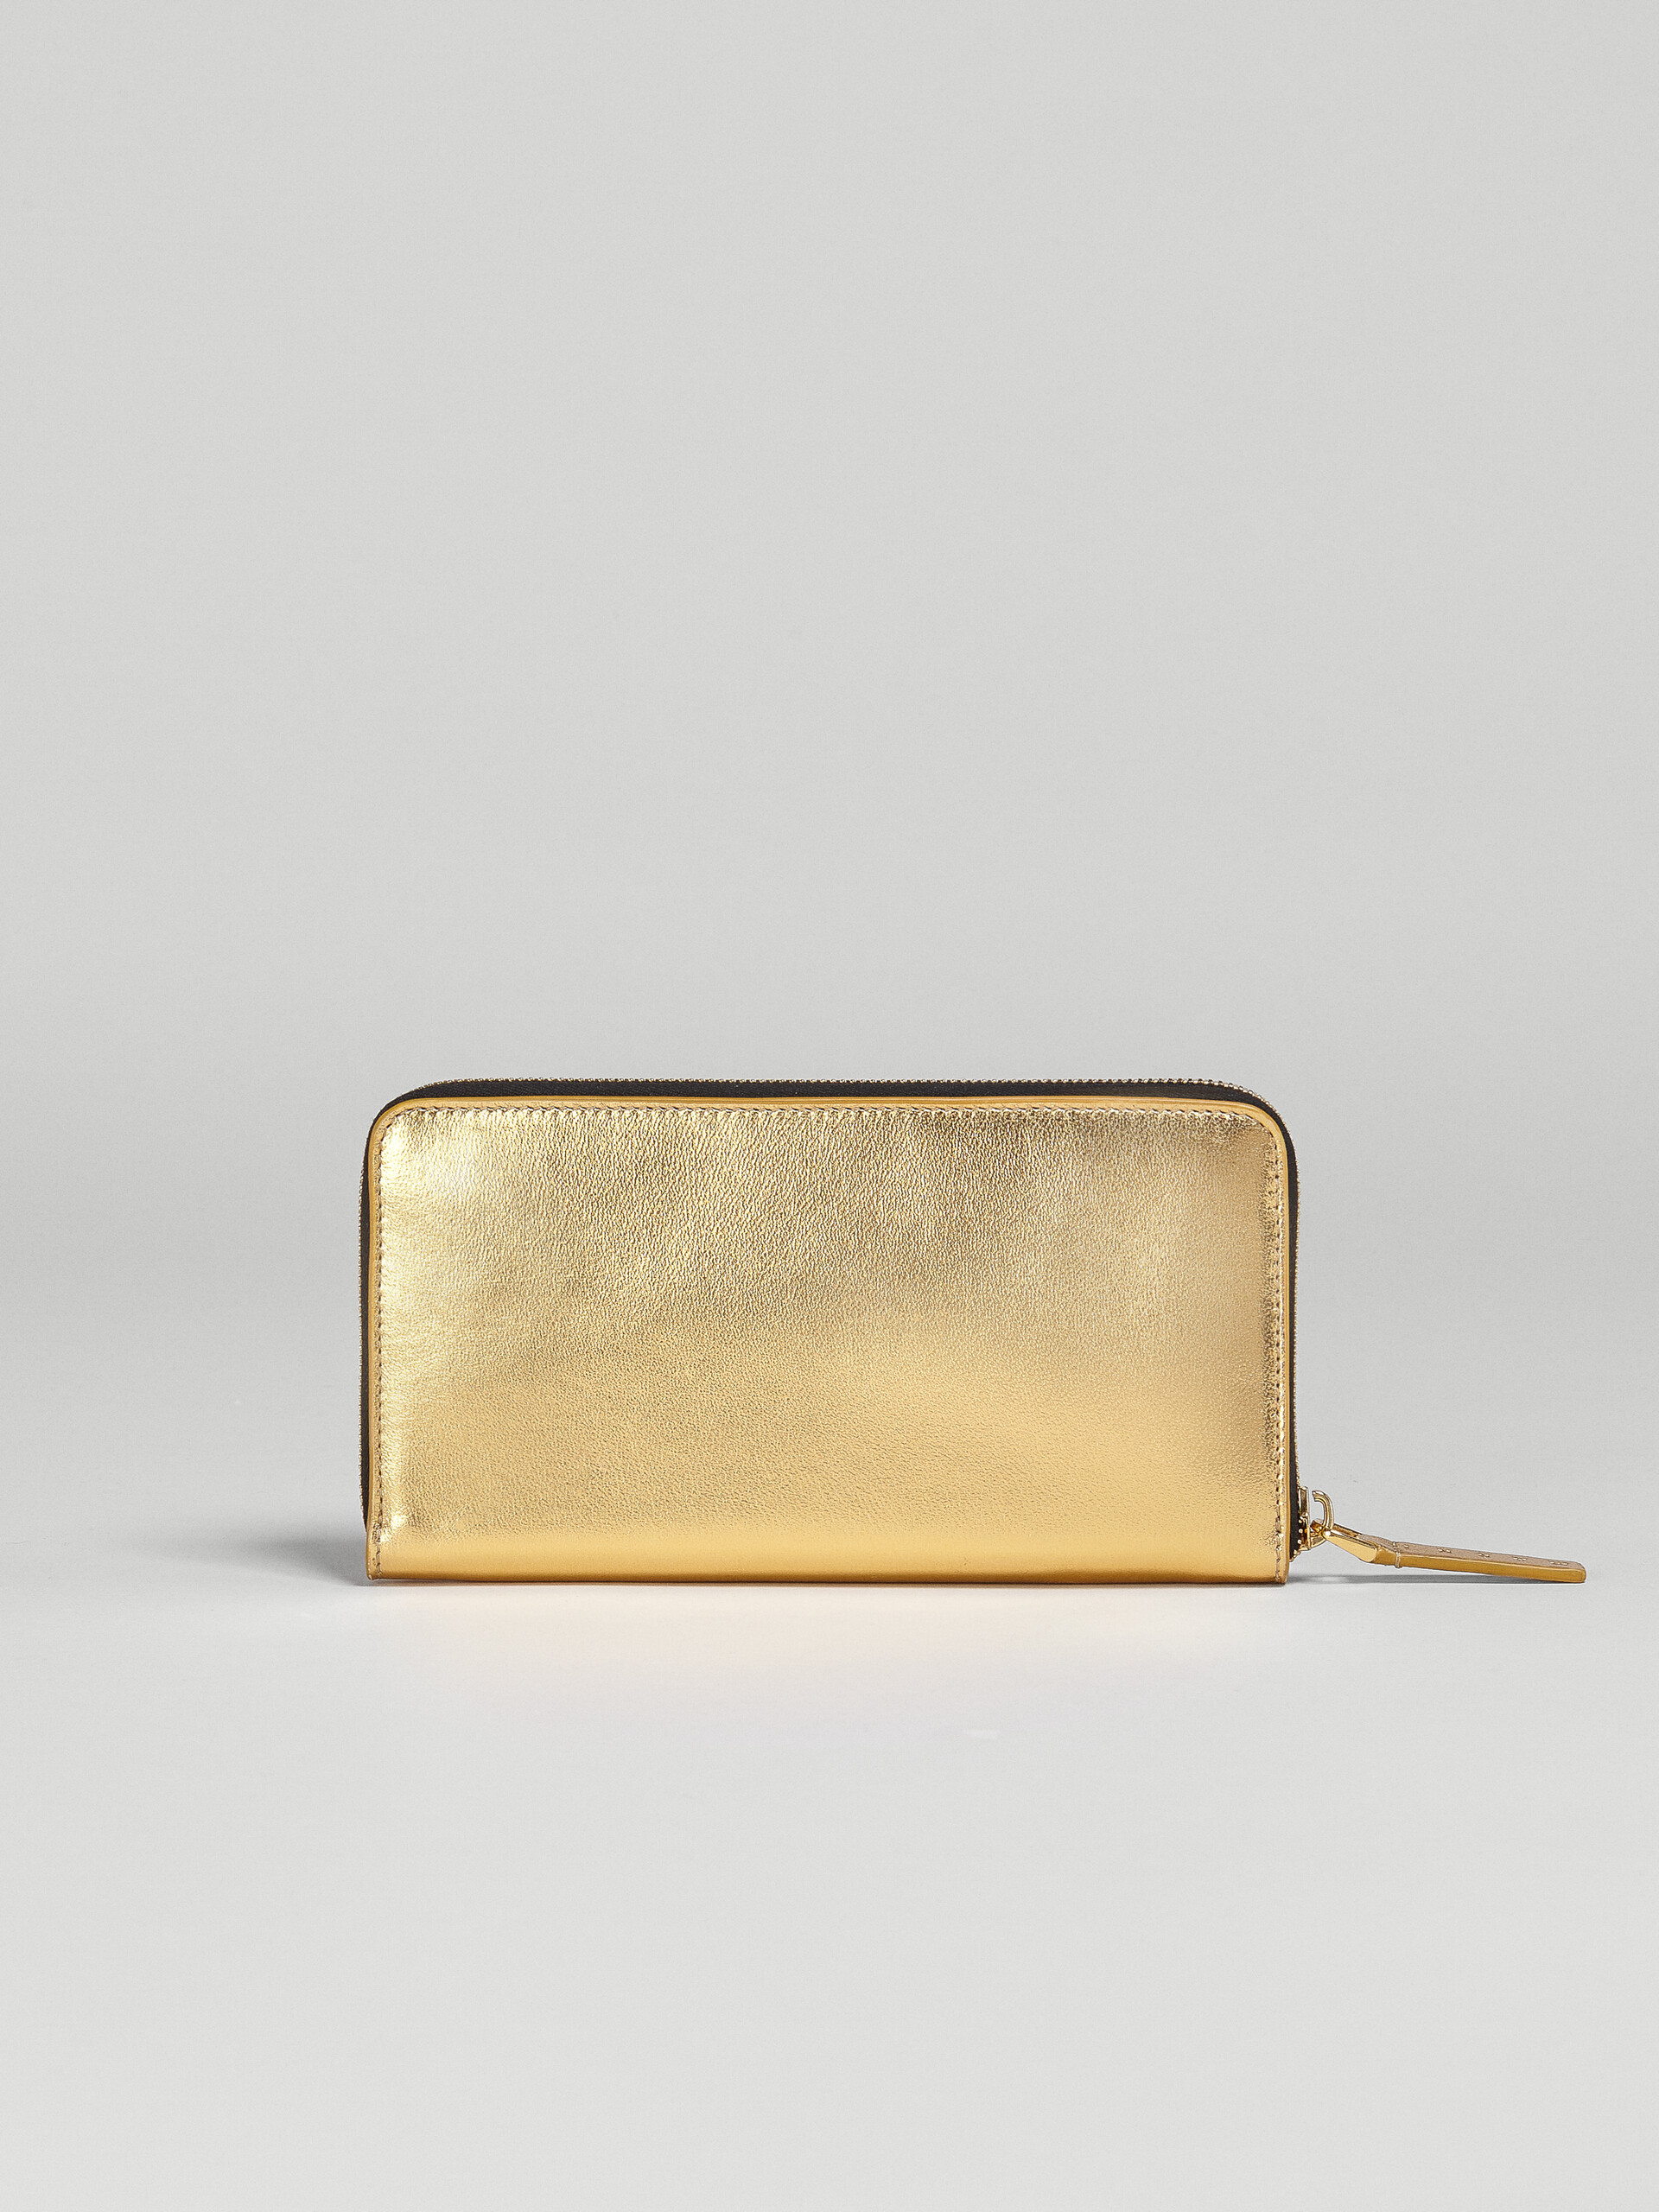 Gold metallic nappa leather zip-around wallet - Wallets - Image 3